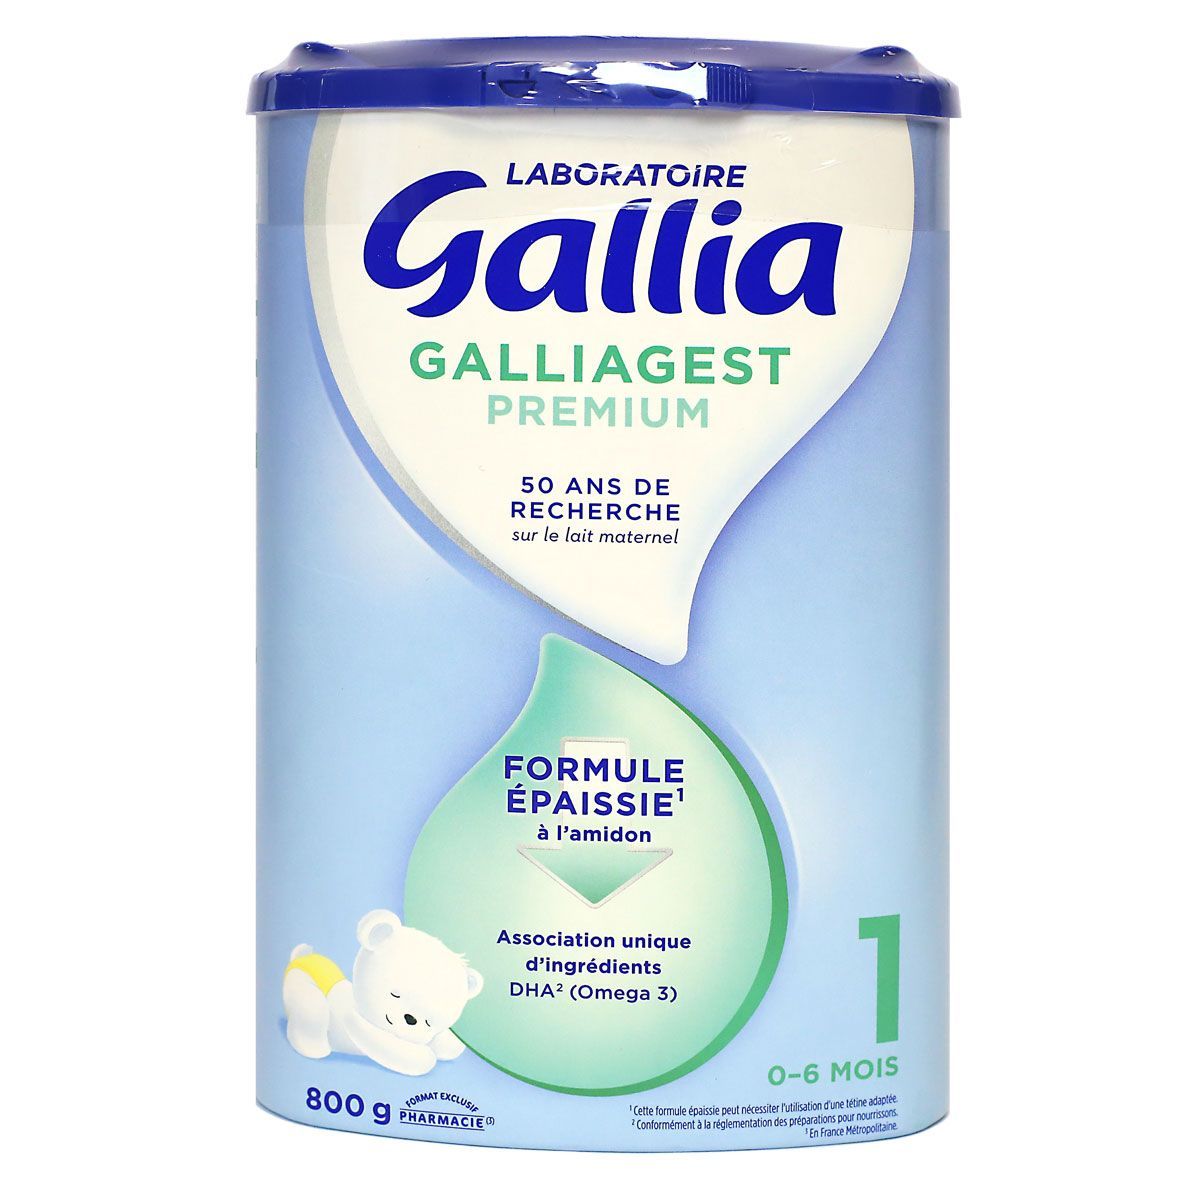 Gallia Bébé Expert lait Anti-Régurgitations 1 800 g